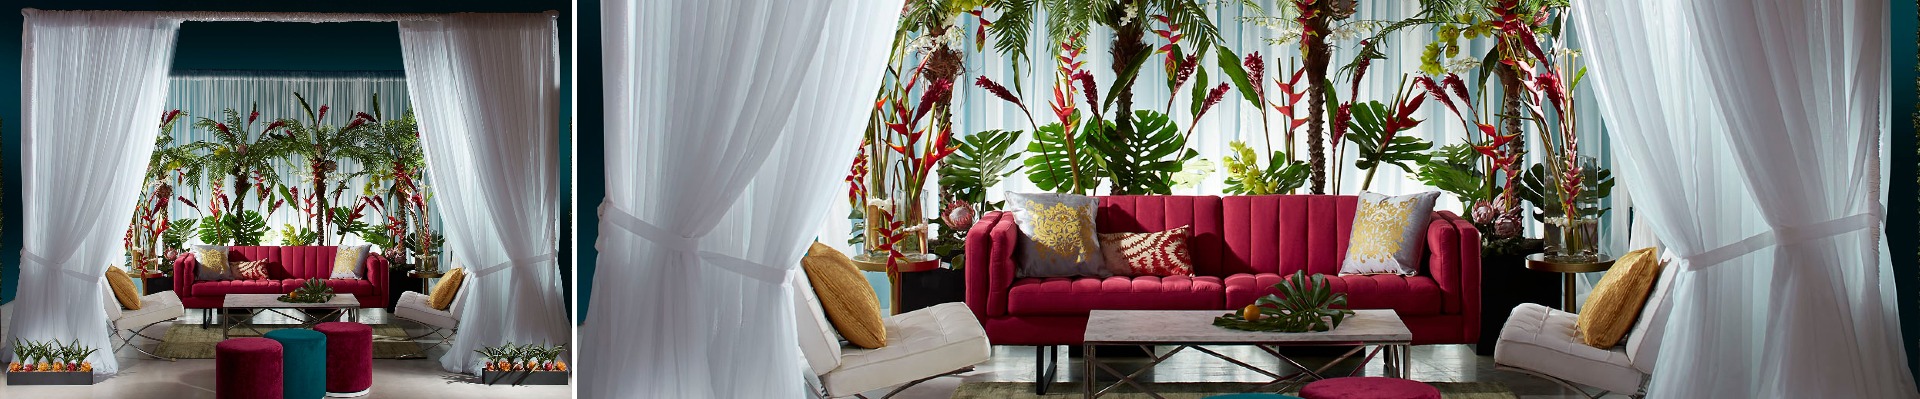 White drape cabana with red sofa and ottoman